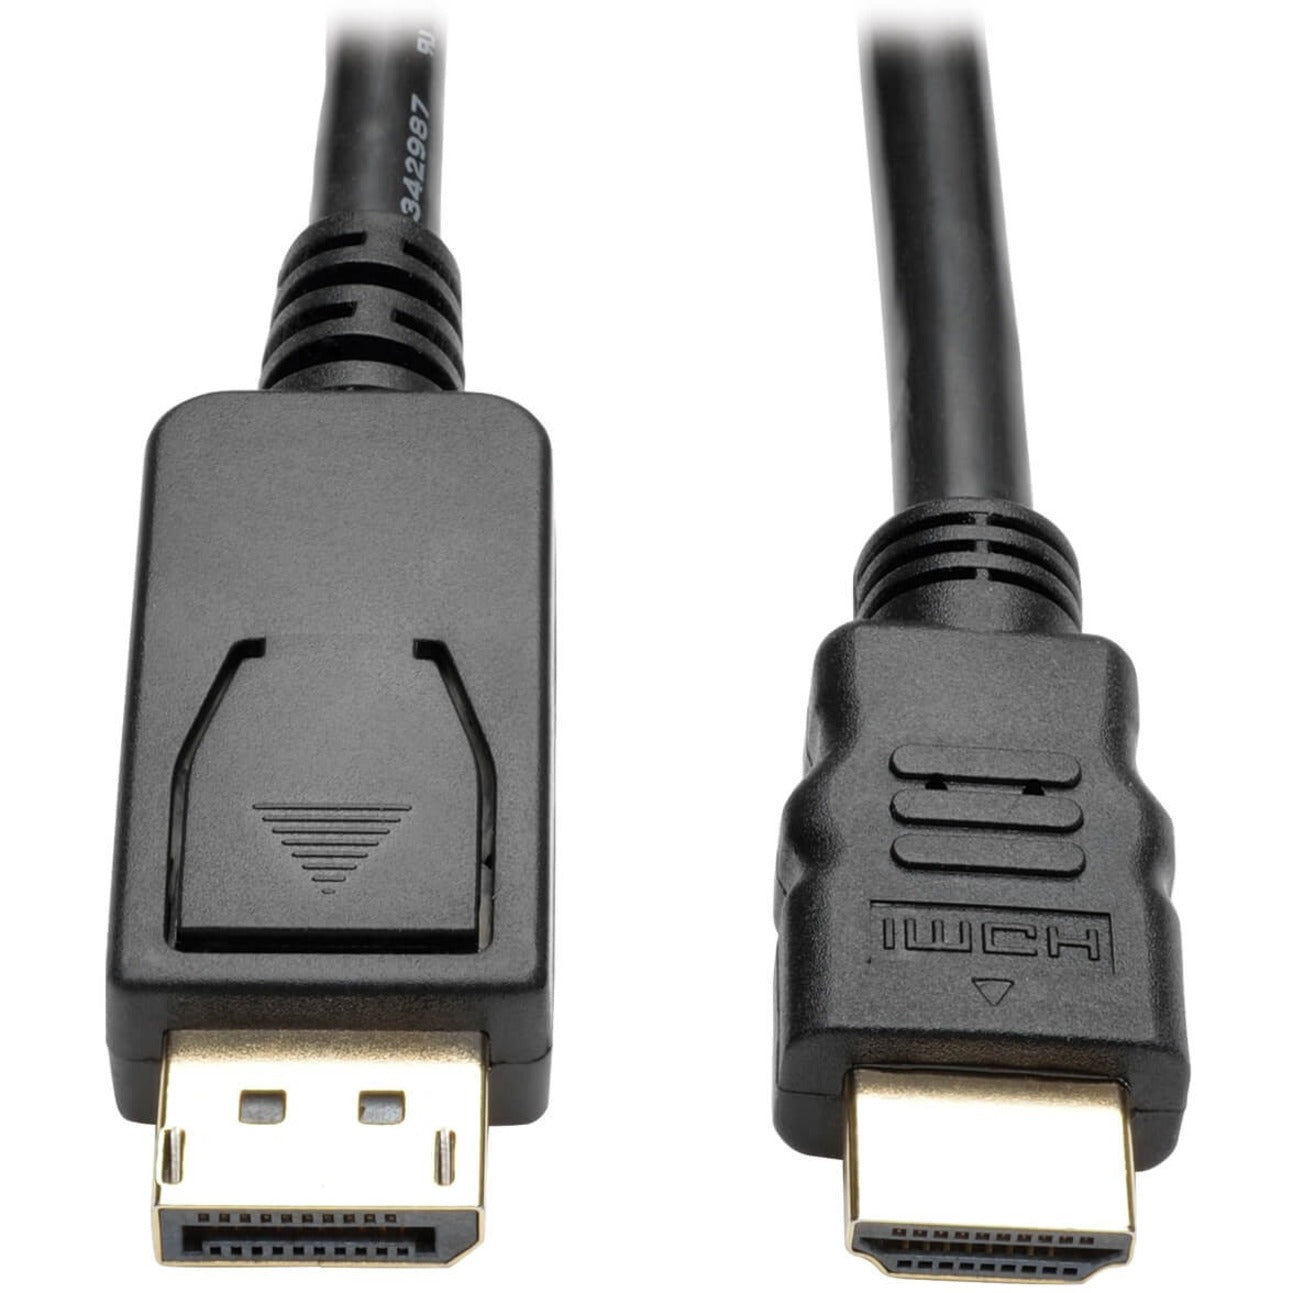 Tripp Lite P582-006-V2 Adaptateur de câble DisplayPort 1.2 vers HDMI 6 pi. UHD Connecteurs plaqués or noir